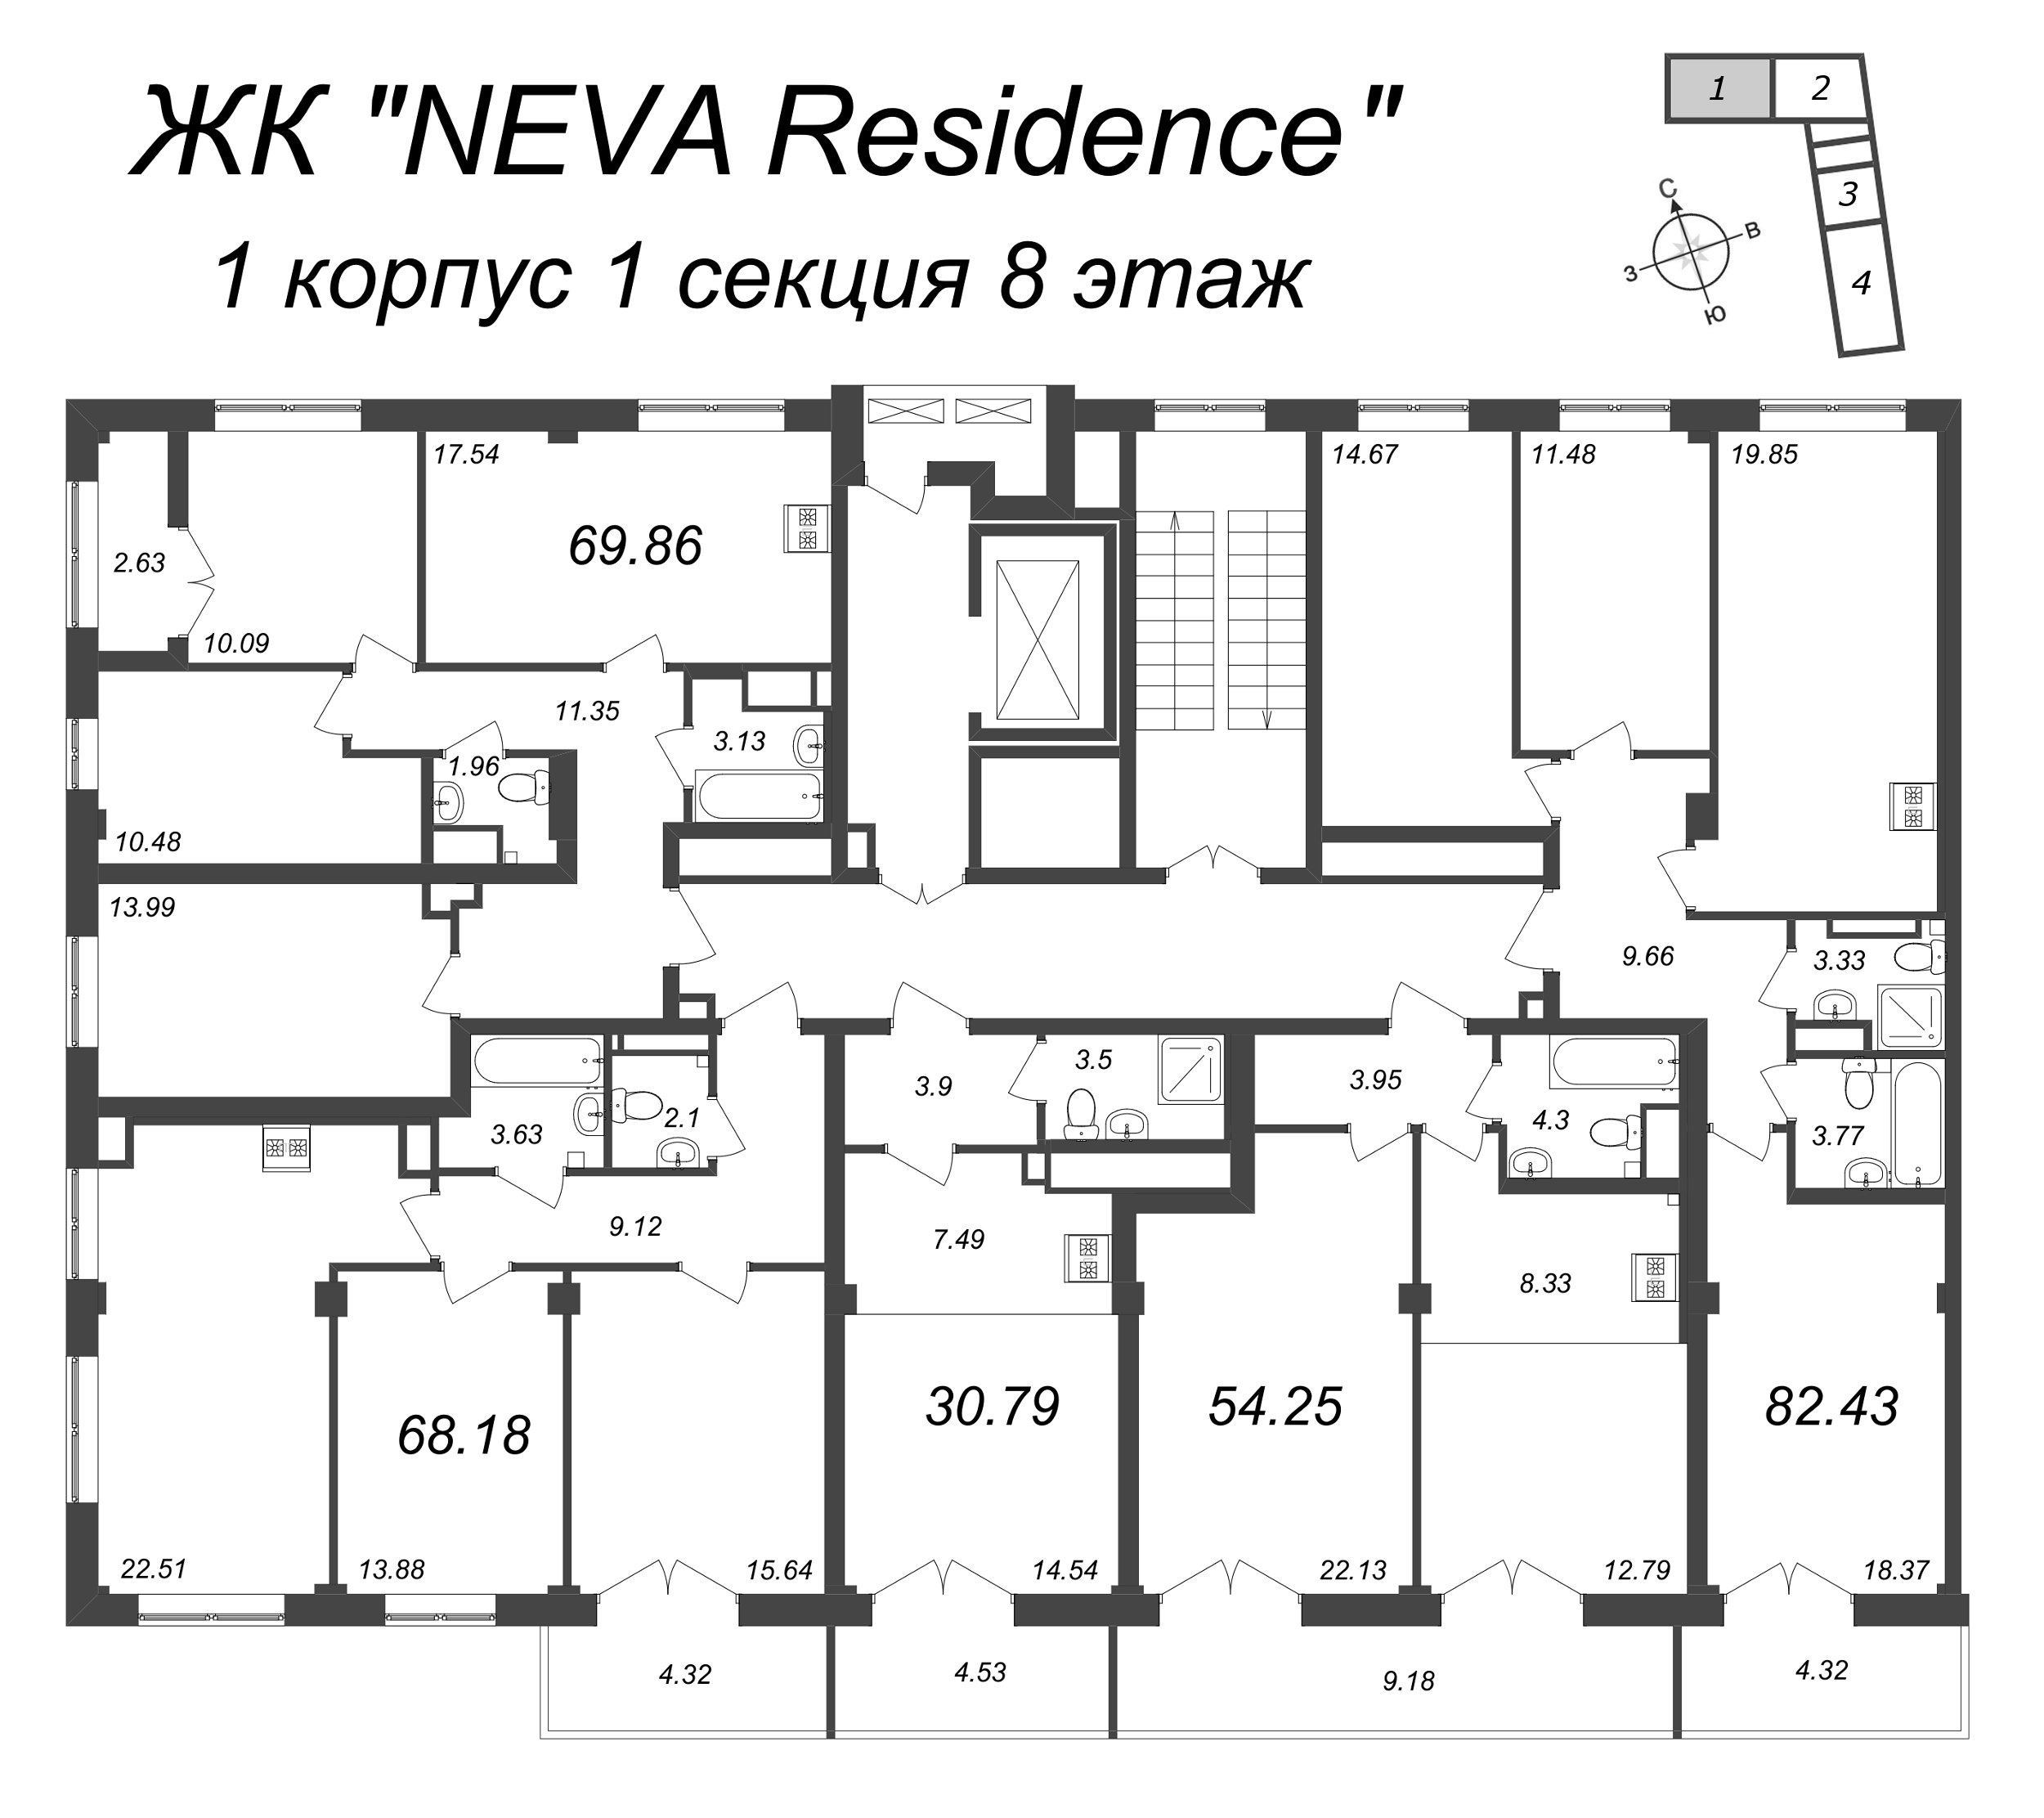 4-комнатная (Евро) квартира, 69.86 м² - планировка этажа